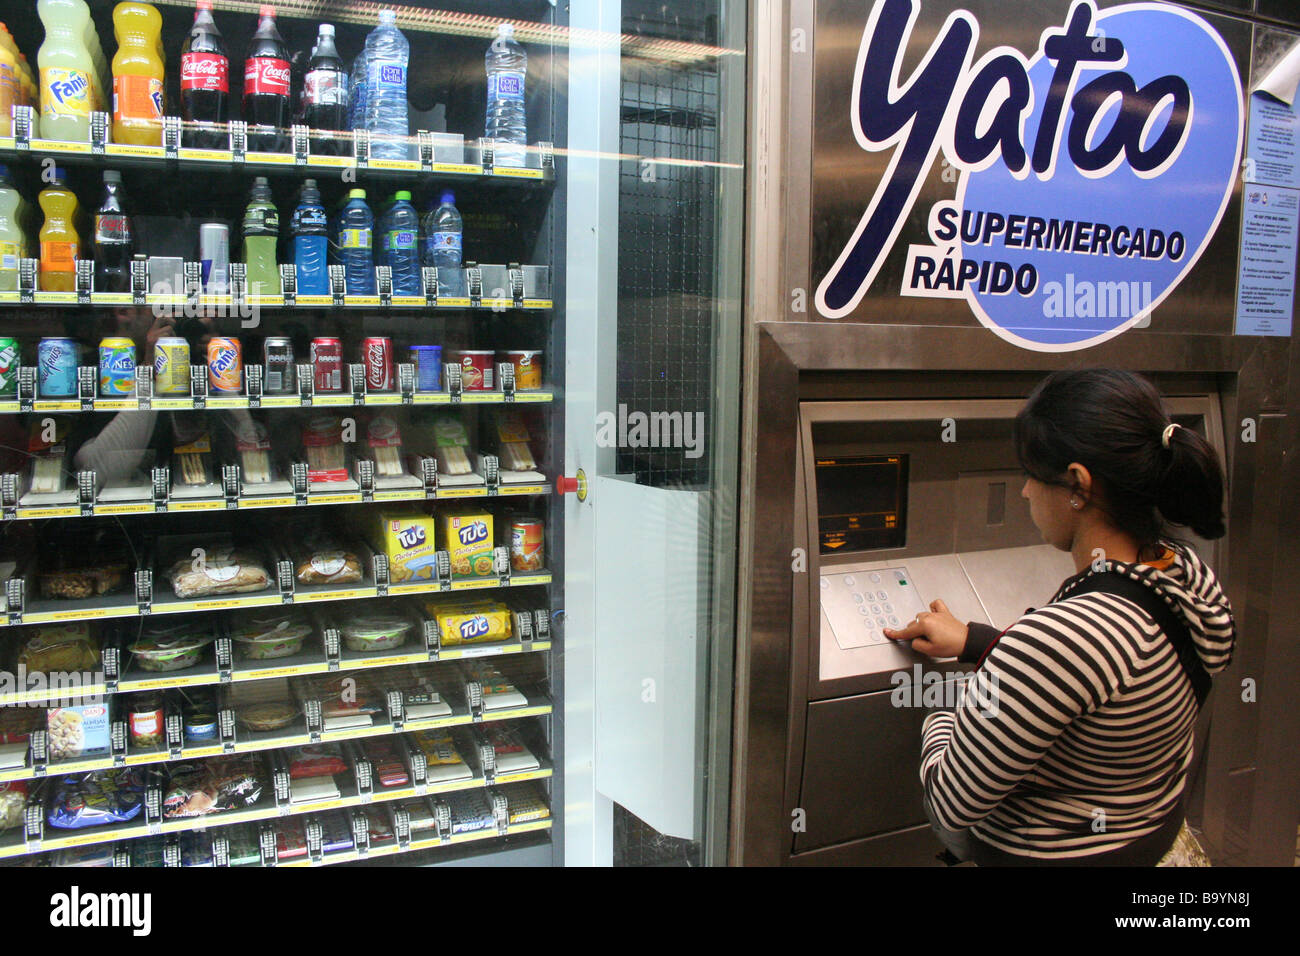 Yatoo Supermercado Rapido Giant Vending Machine Stock Photo